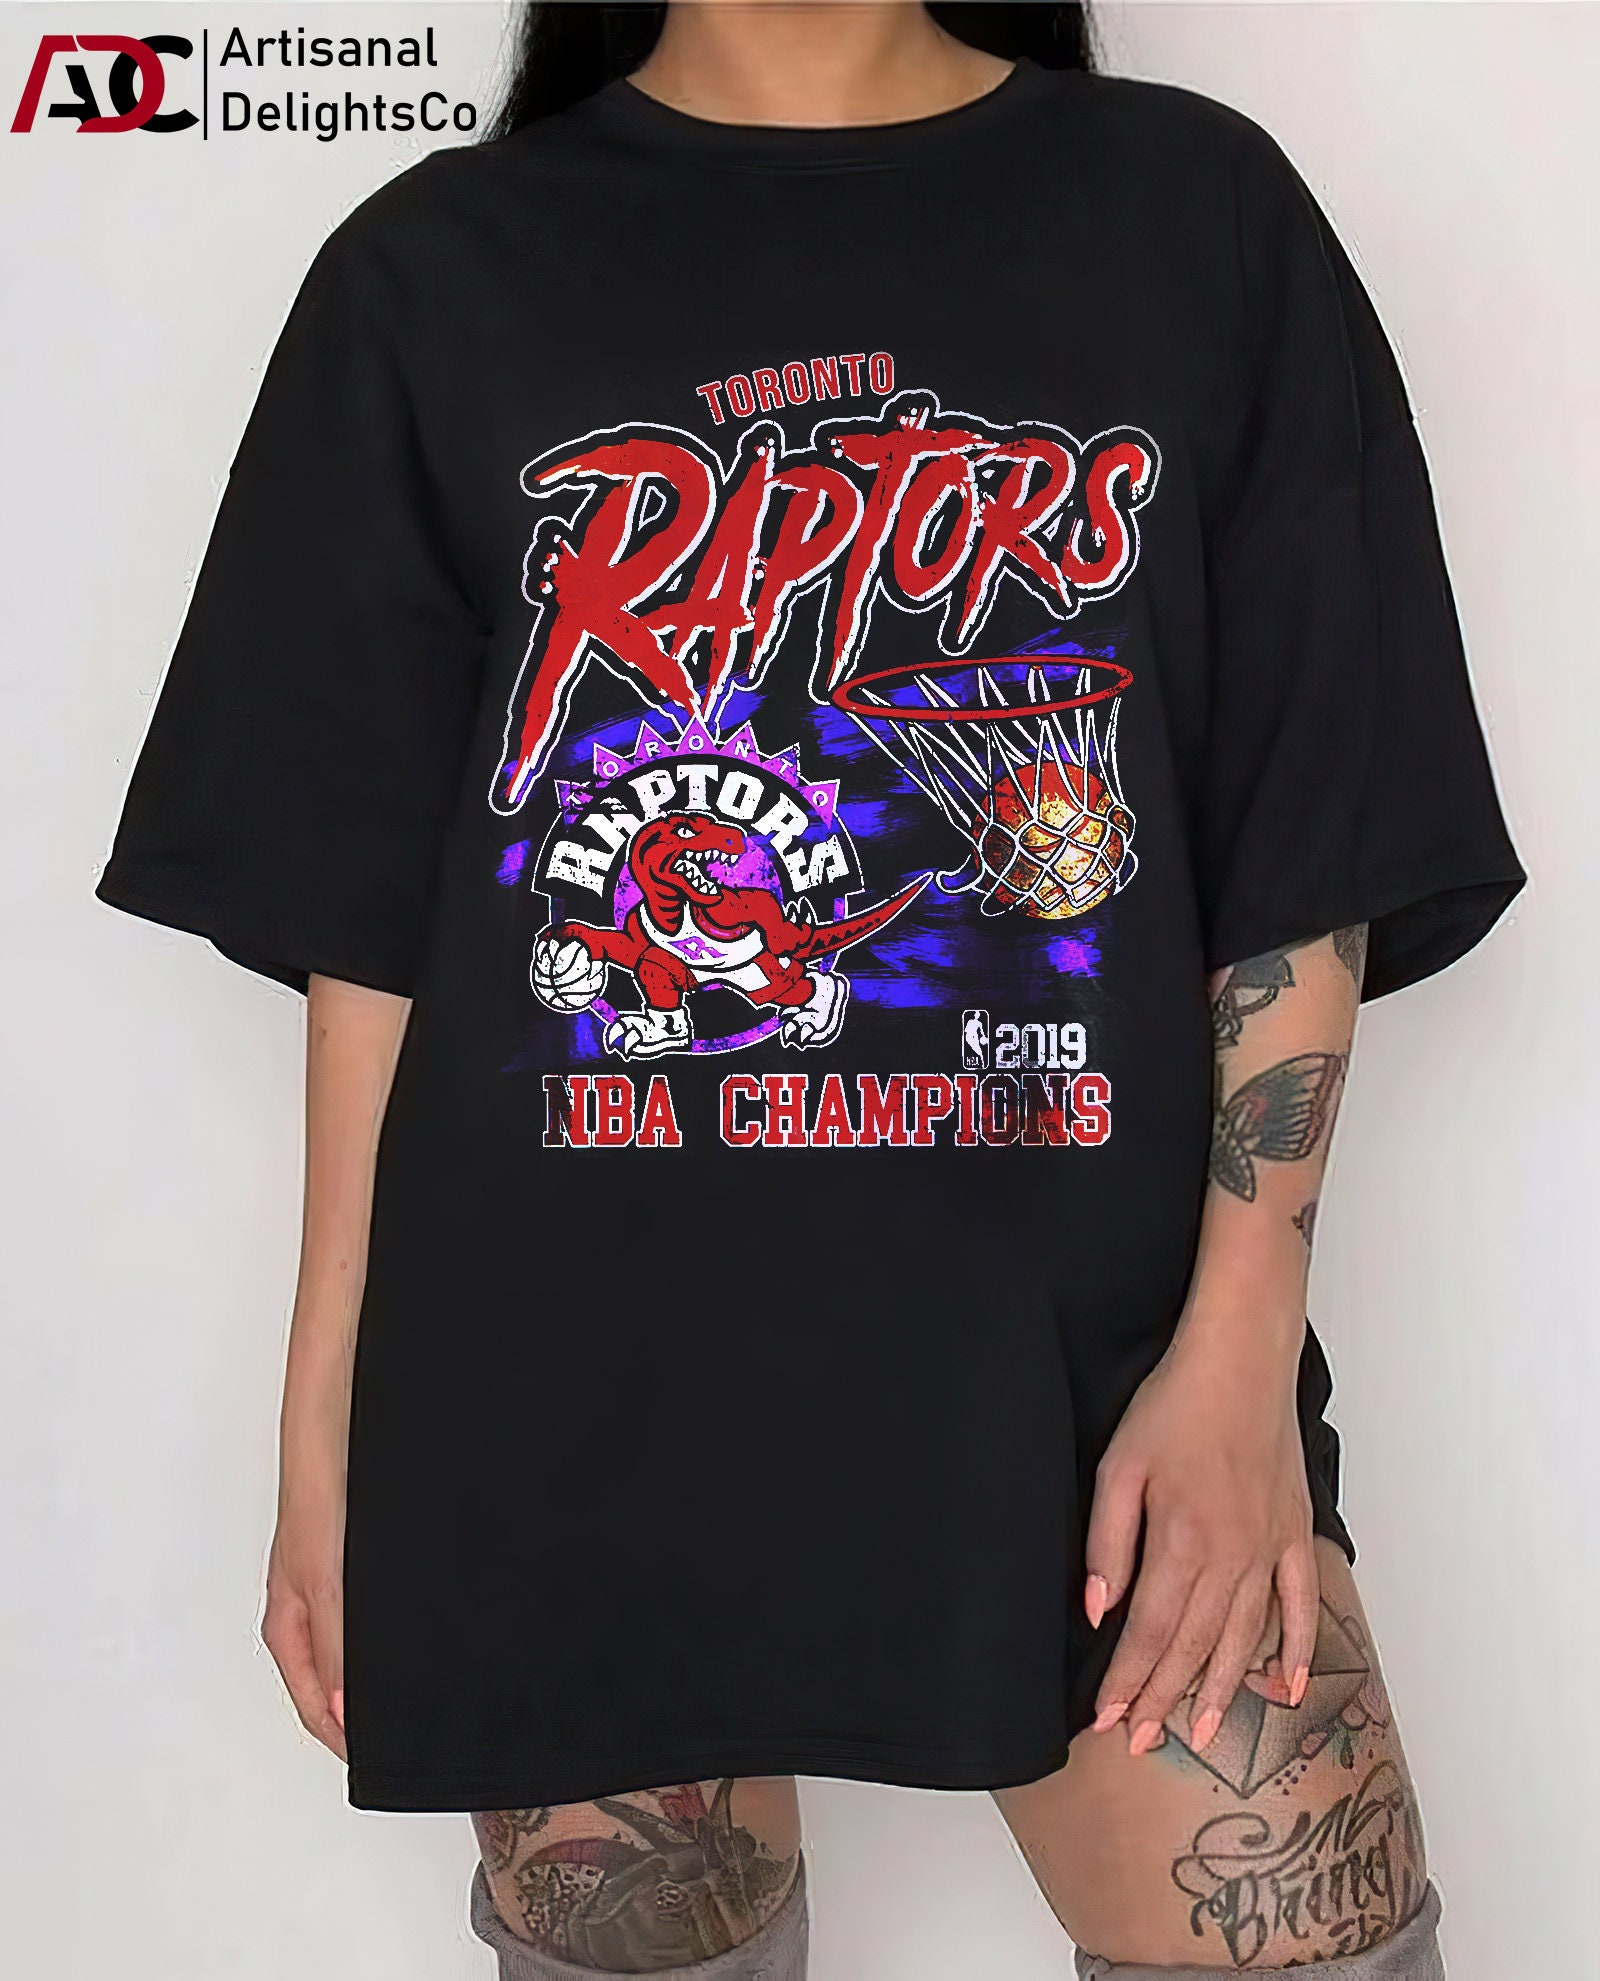 Toronto Raptors Vintage 90s T-Shirt, Toronto Raptors Shirt, Vintage Wash T  shirt, Vintage Bootleg Inspired Tee